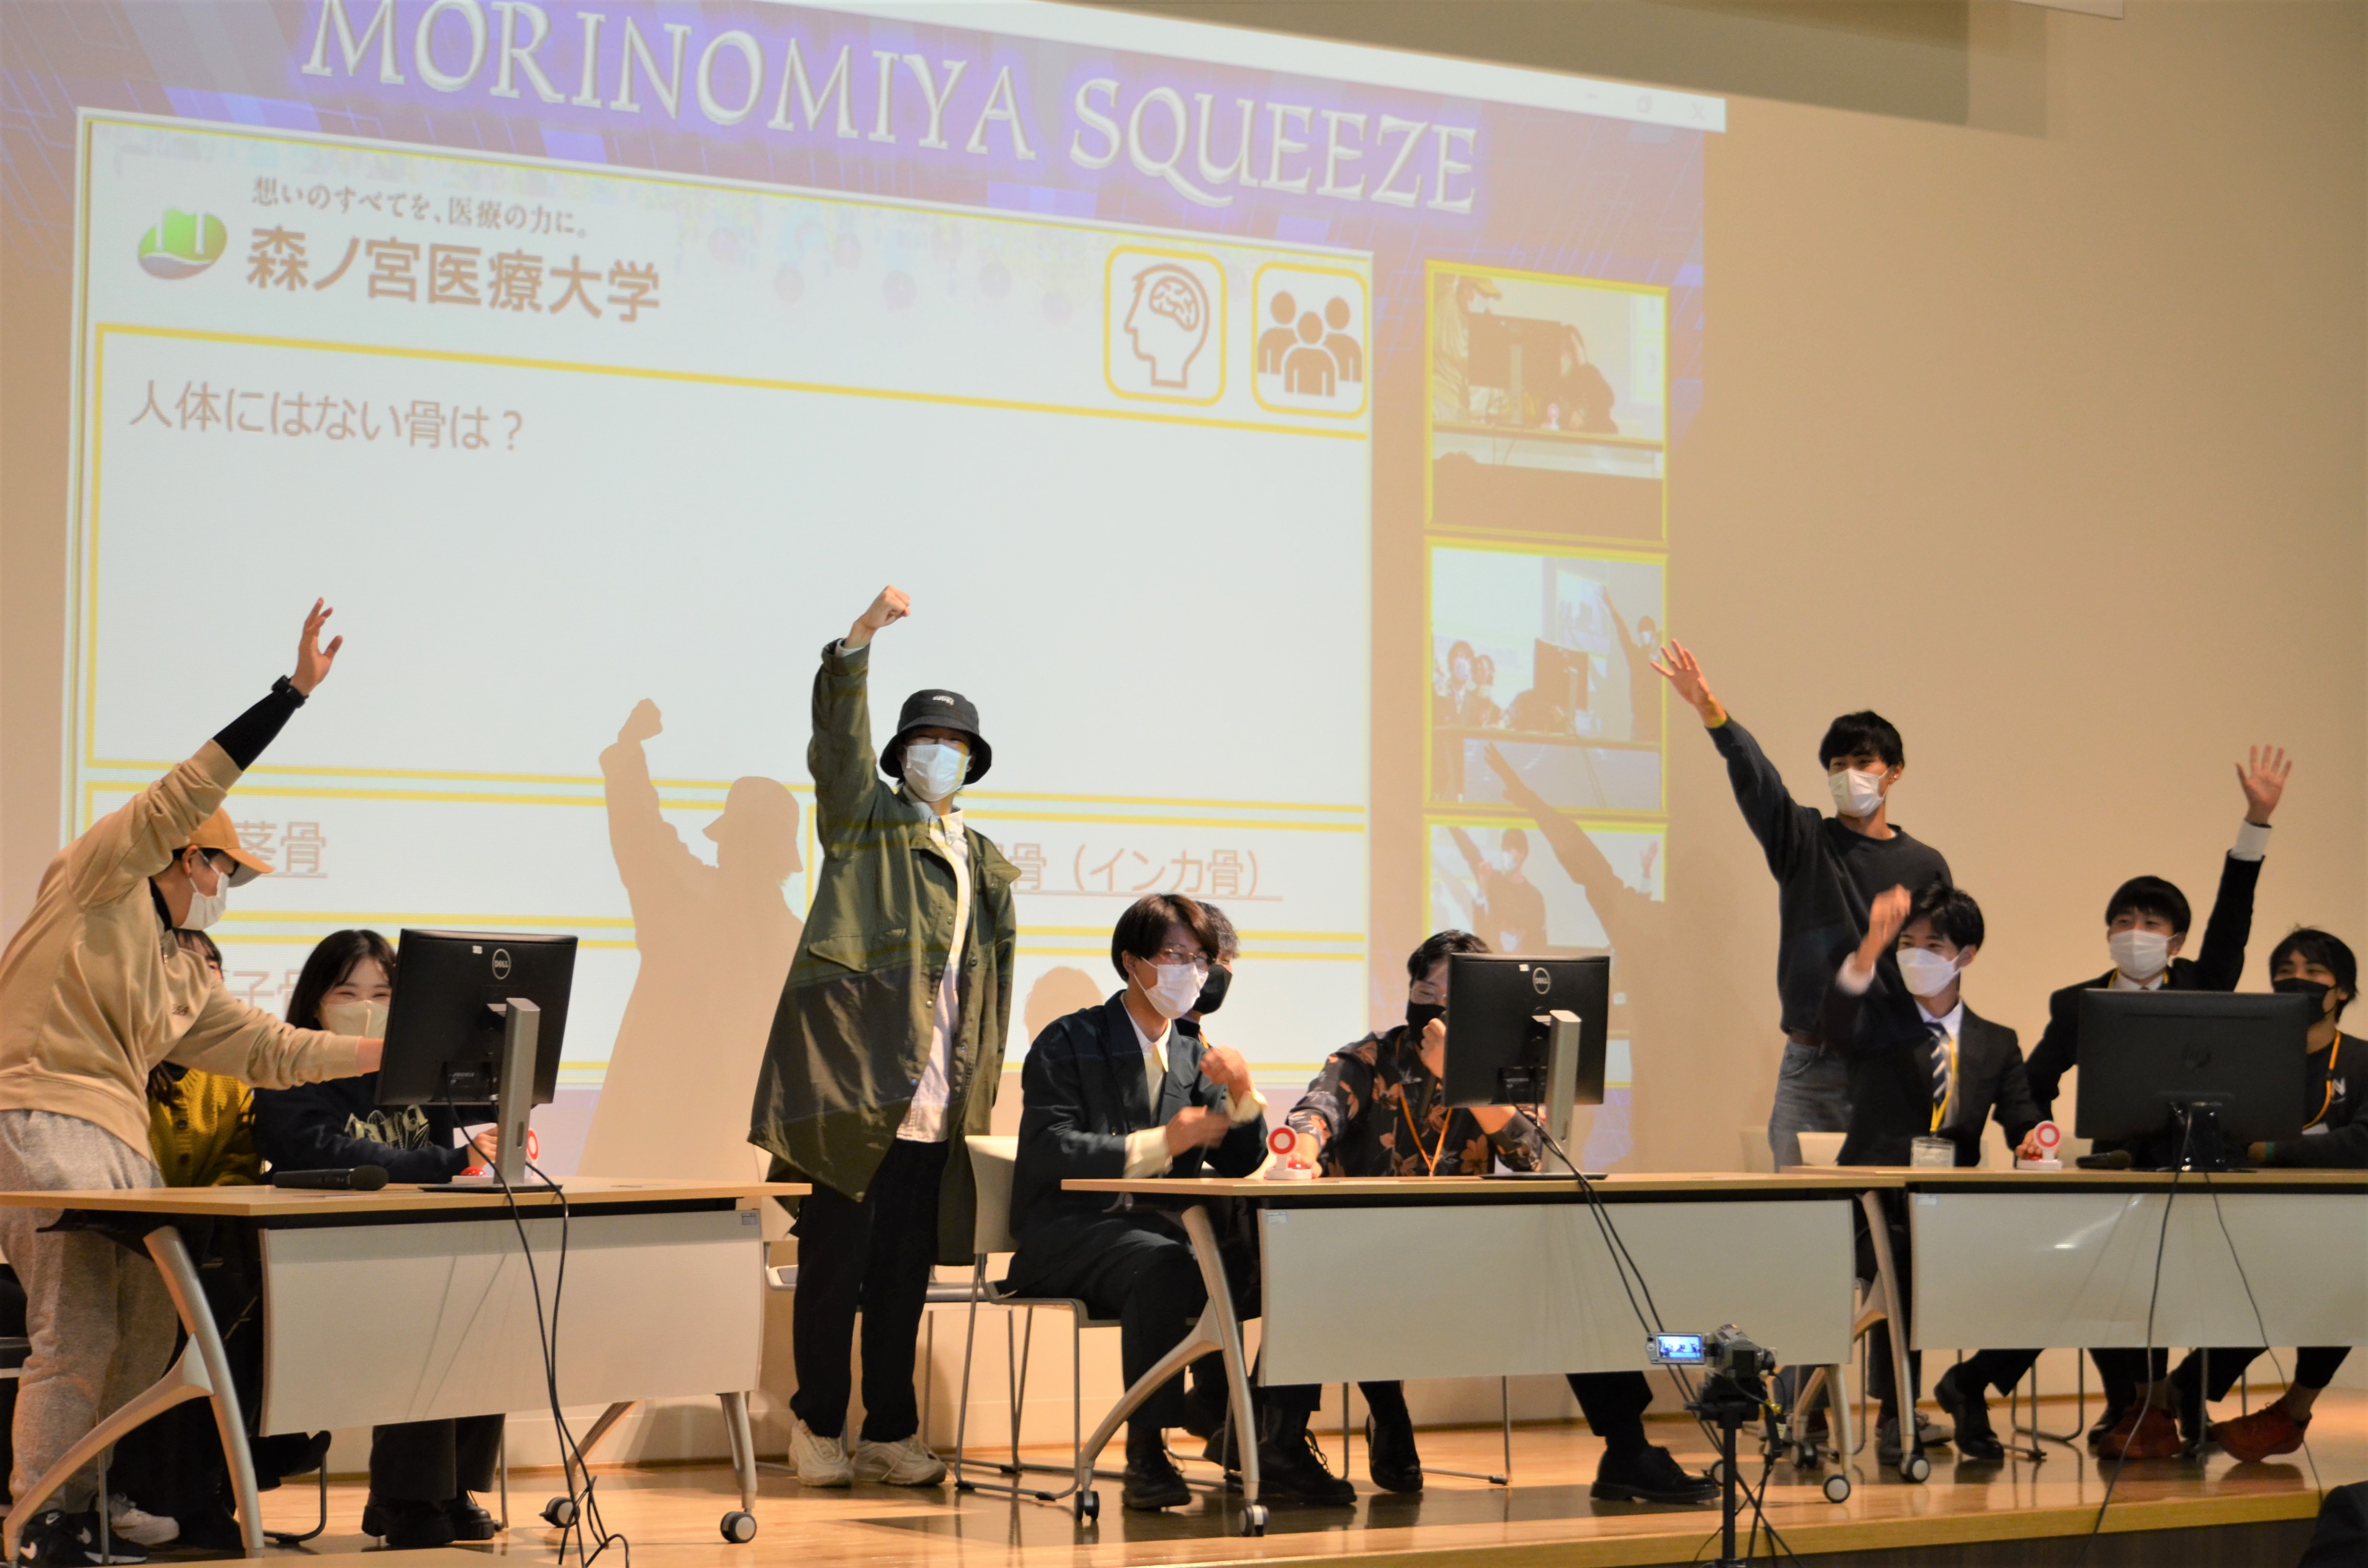 「Morinomiya squeeze」決勝戦